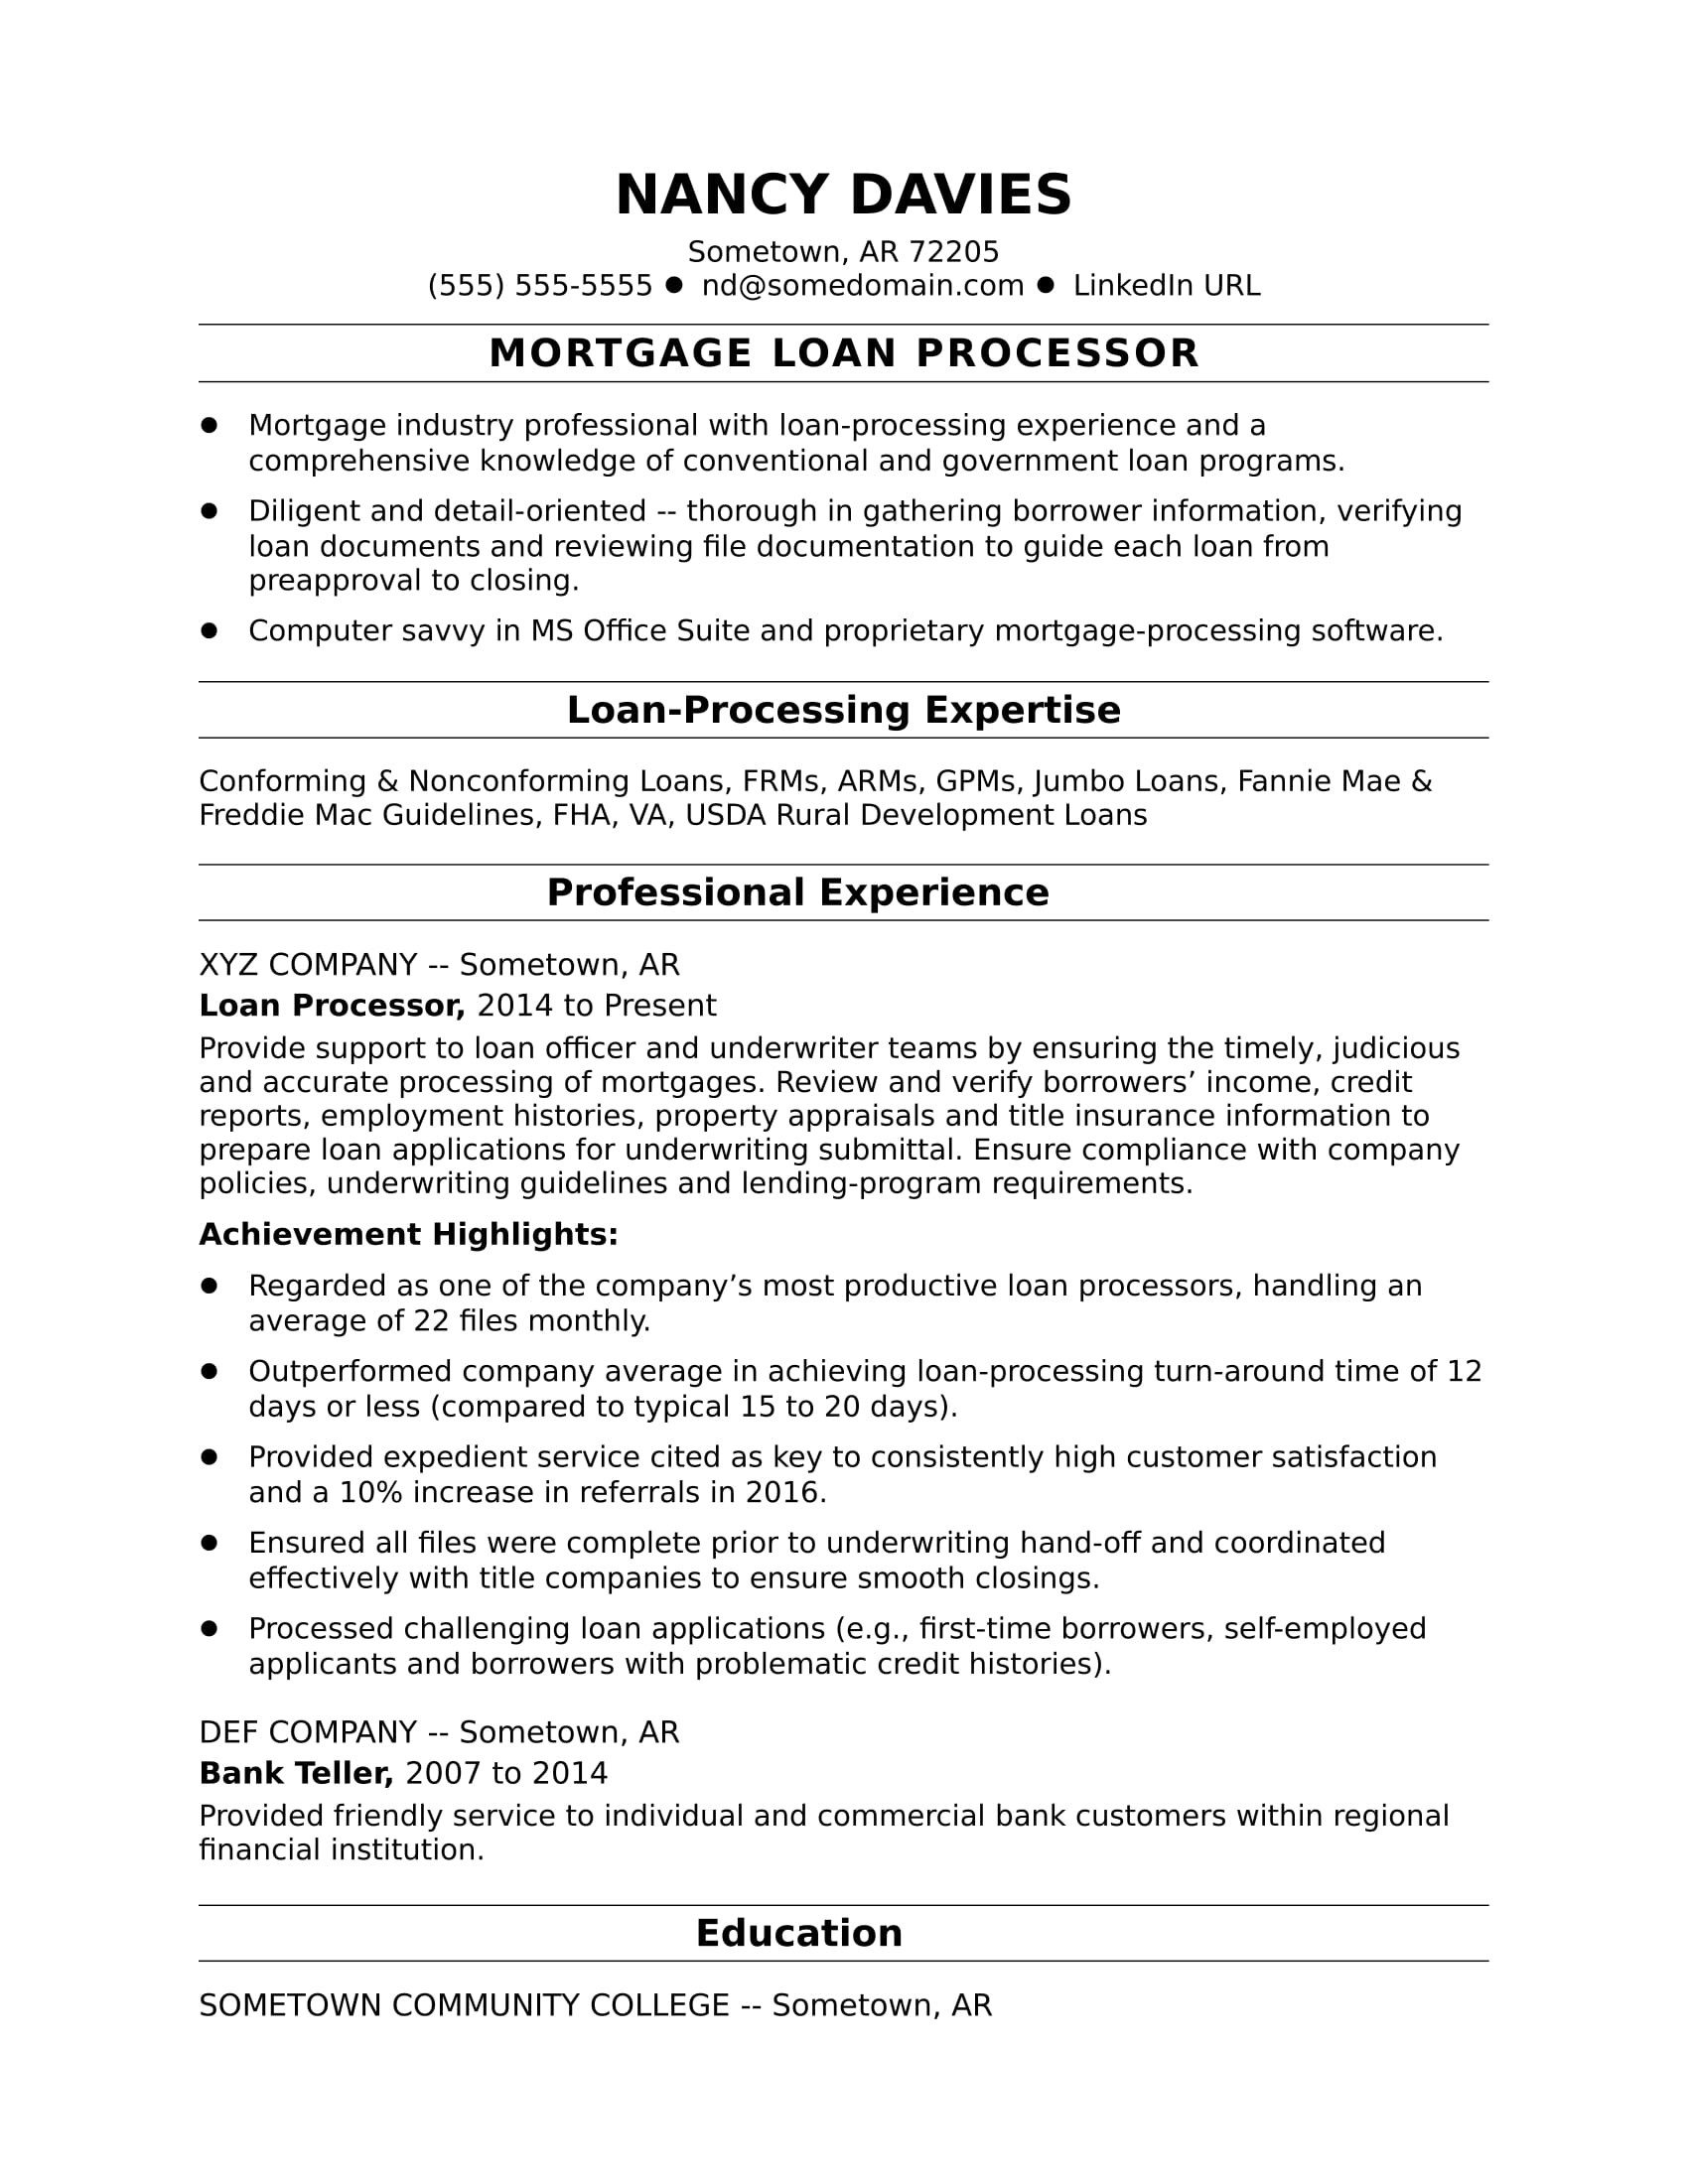 Sample Resume for Senior Mortgage originator Mortgage Loan Processor Resume Sample Monster.com